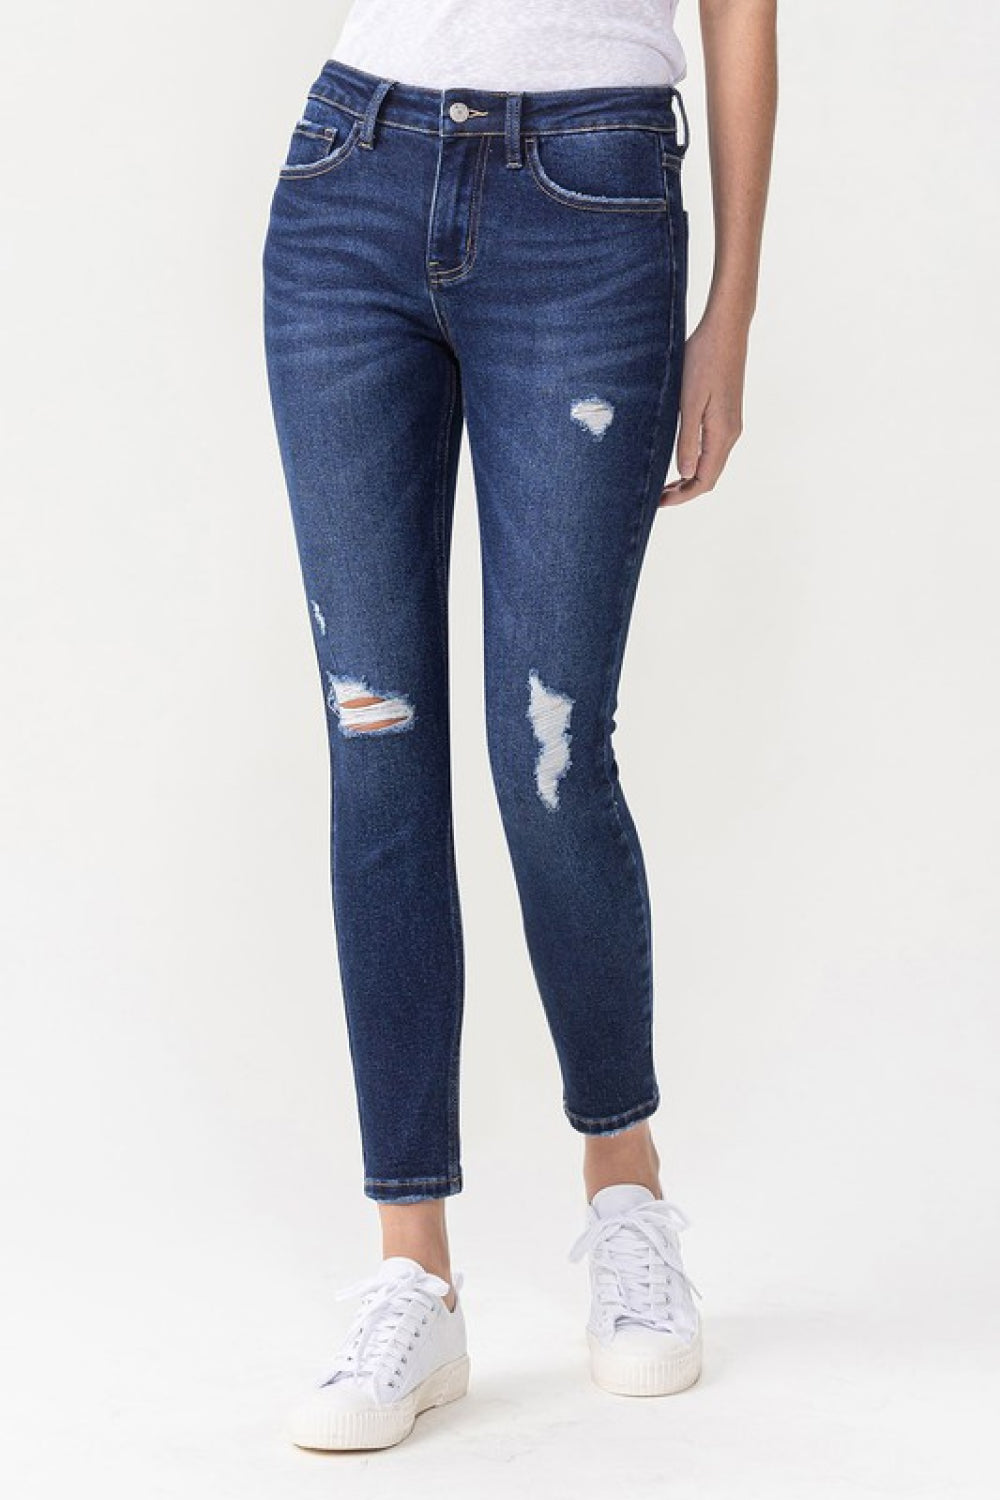 Lovervet Full Size Chelsea Midrise Crop Skinny Jeans - nailedmoms